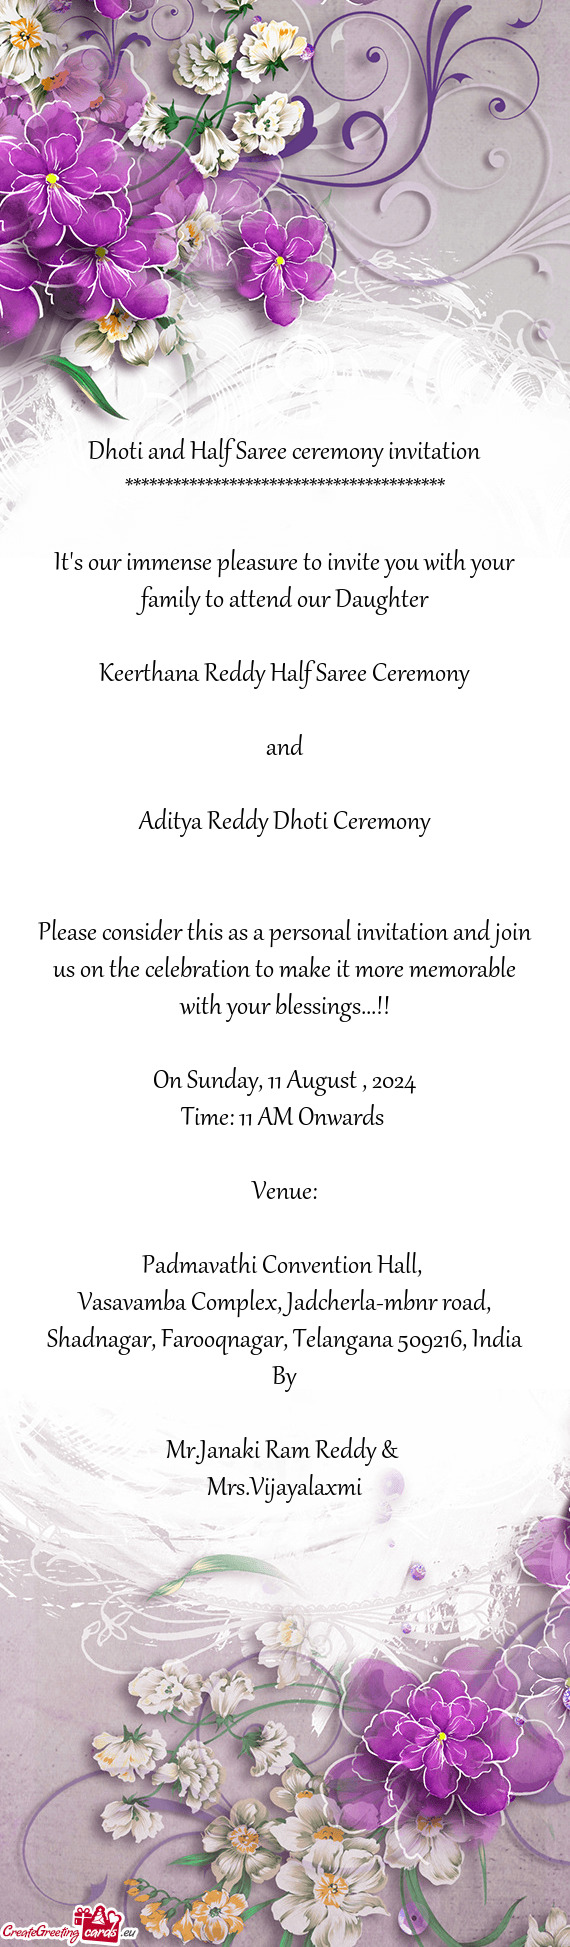 Keerthana Reddy Half Saree Ceremony